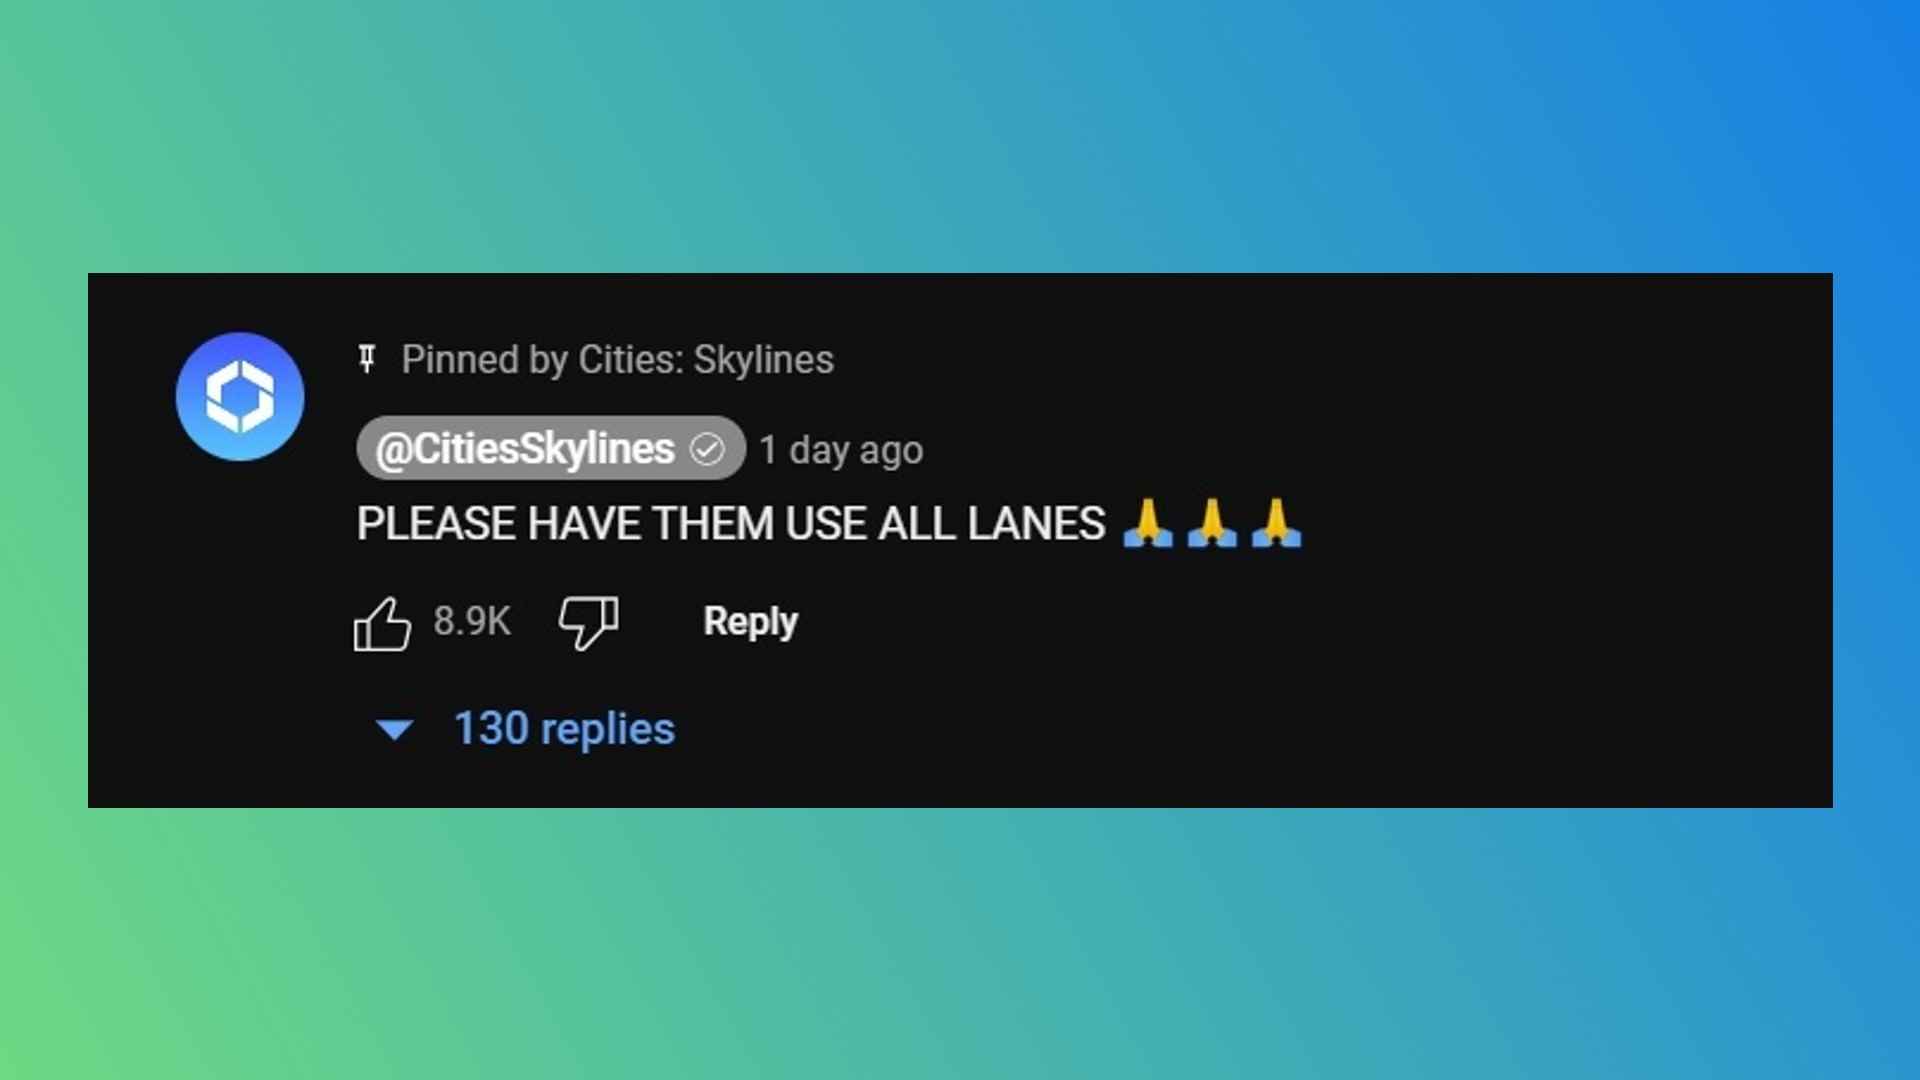 Cities Skylines 2 lanes: Colossal Order'ın şehir kurma oyunu Cities Skylines 2 oynanışı hakkında bir yorum